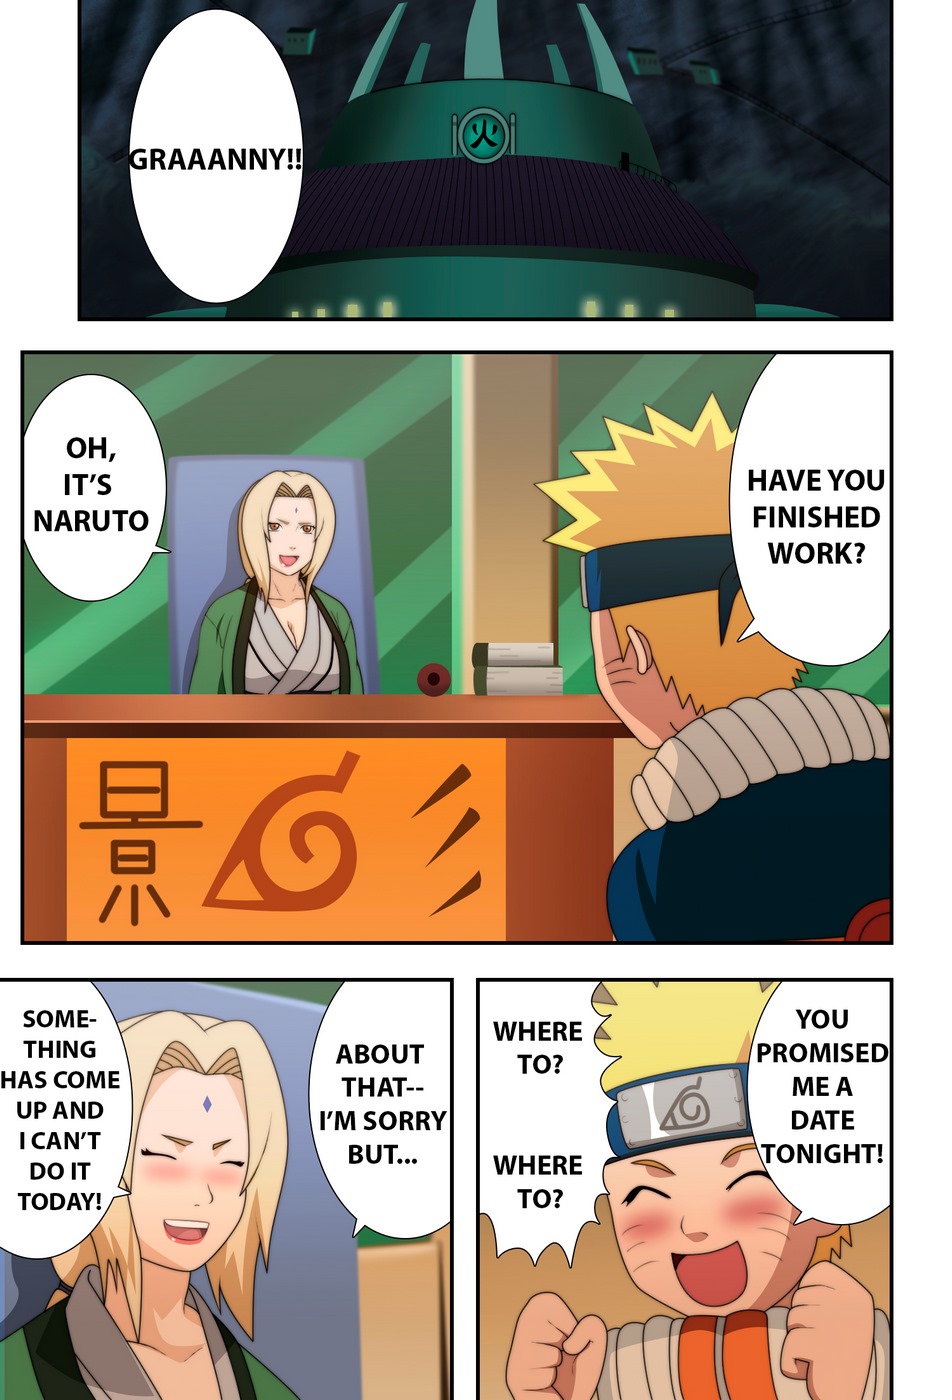 Naruto (Naruho)-ChiChiKage -Big-Breast Ninja